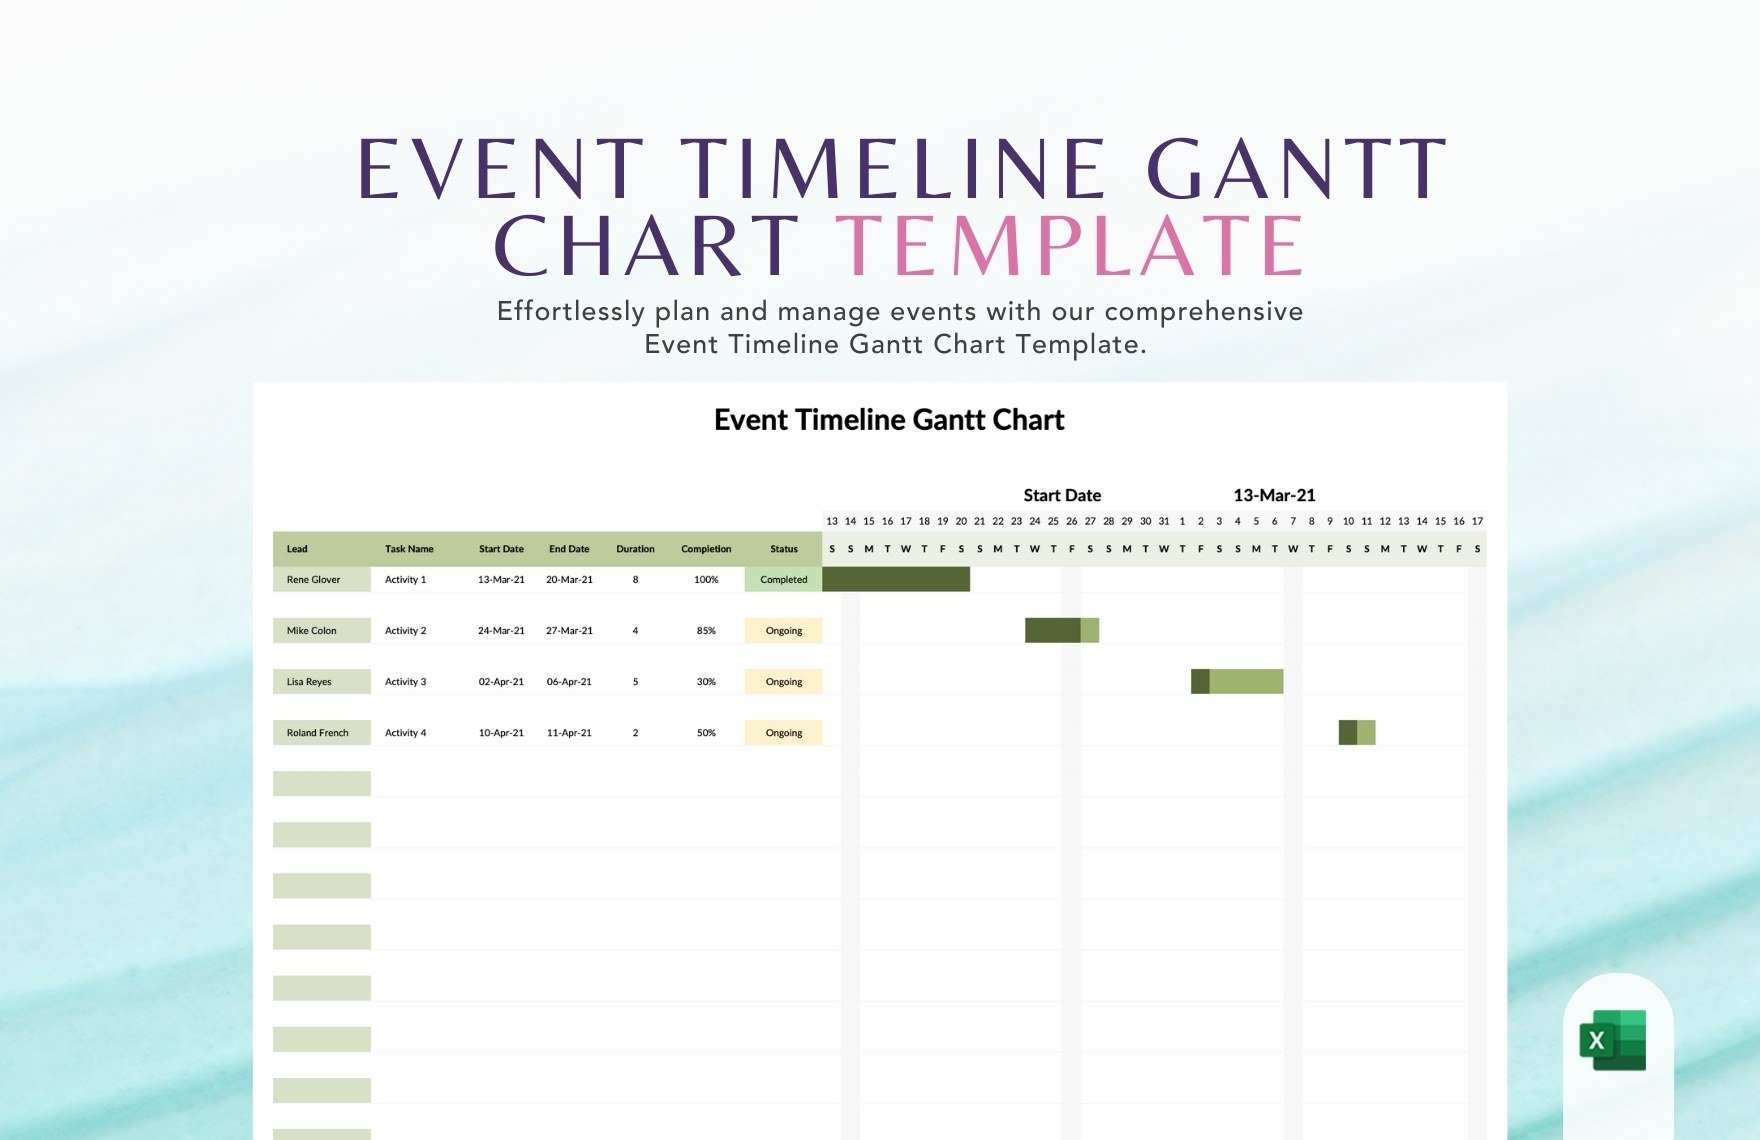 Event Timeline Gantt Chart Template in Excel